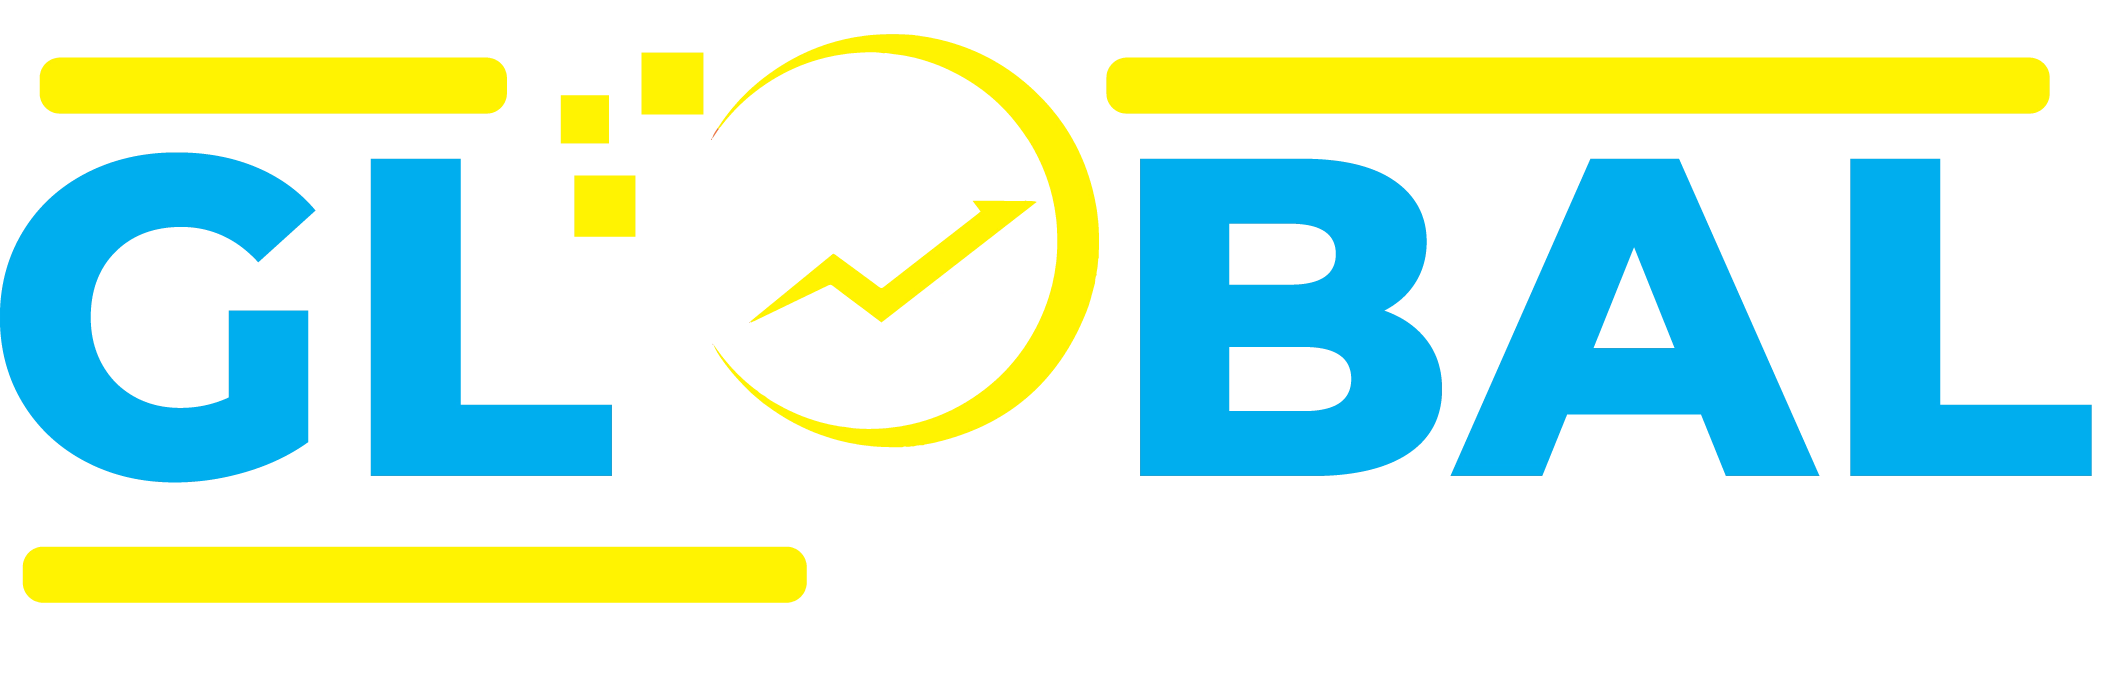 GlobalExecTrade2-logo